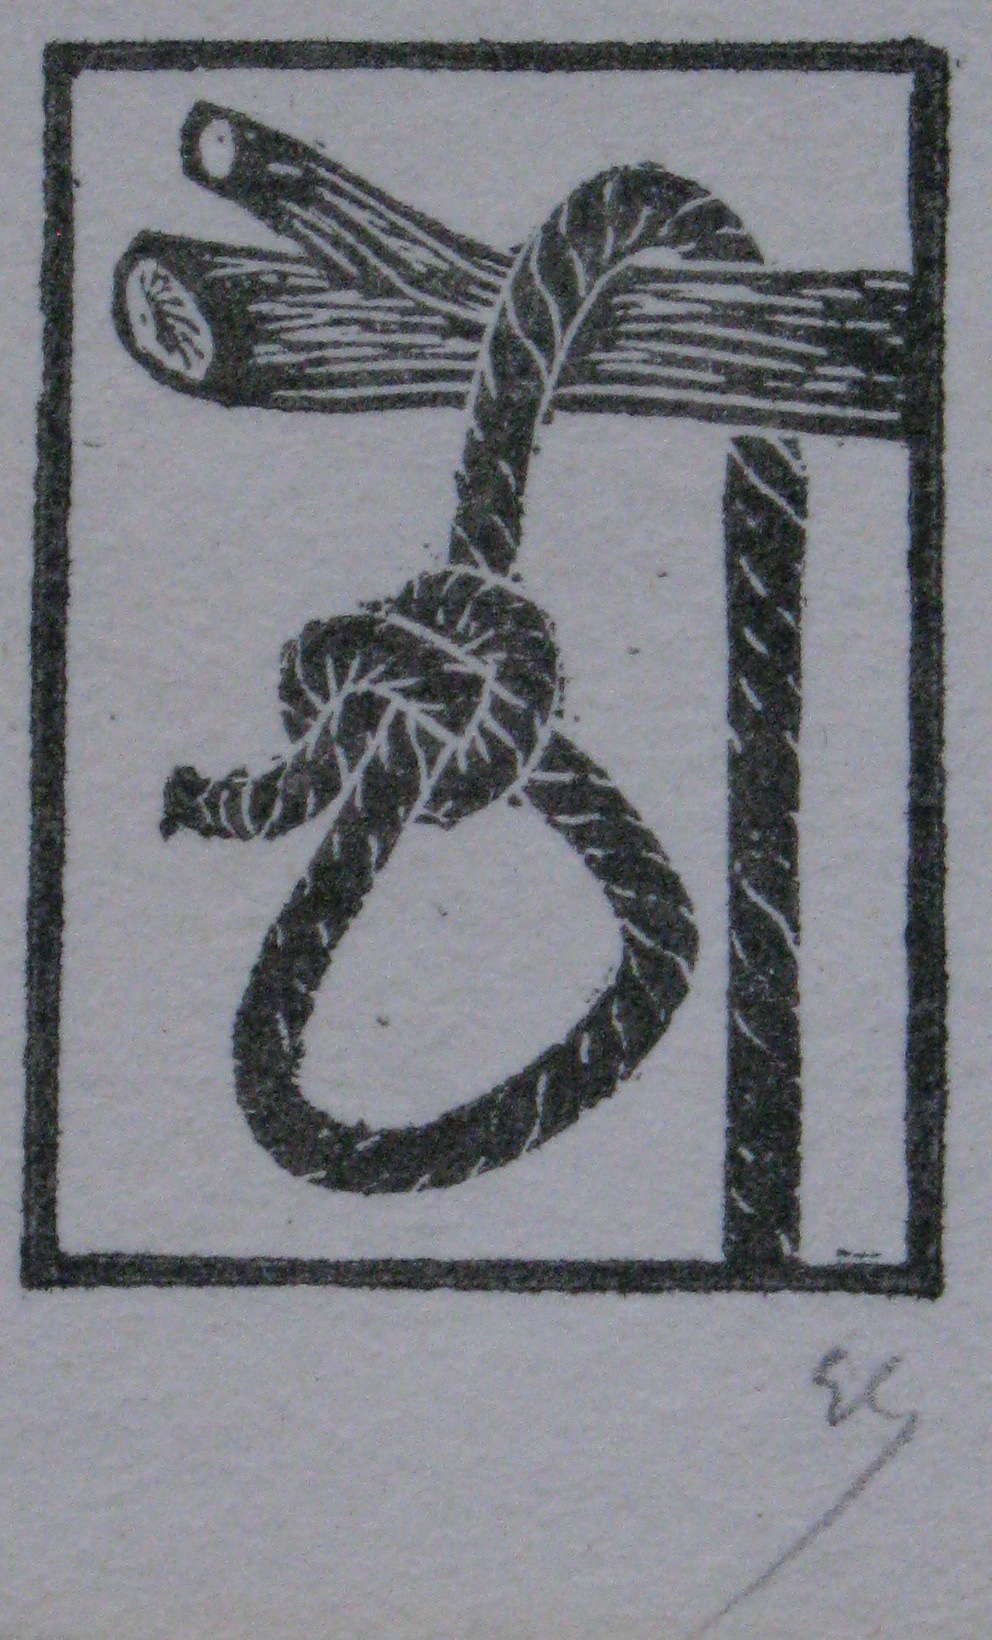 Device: Hangman's Rope